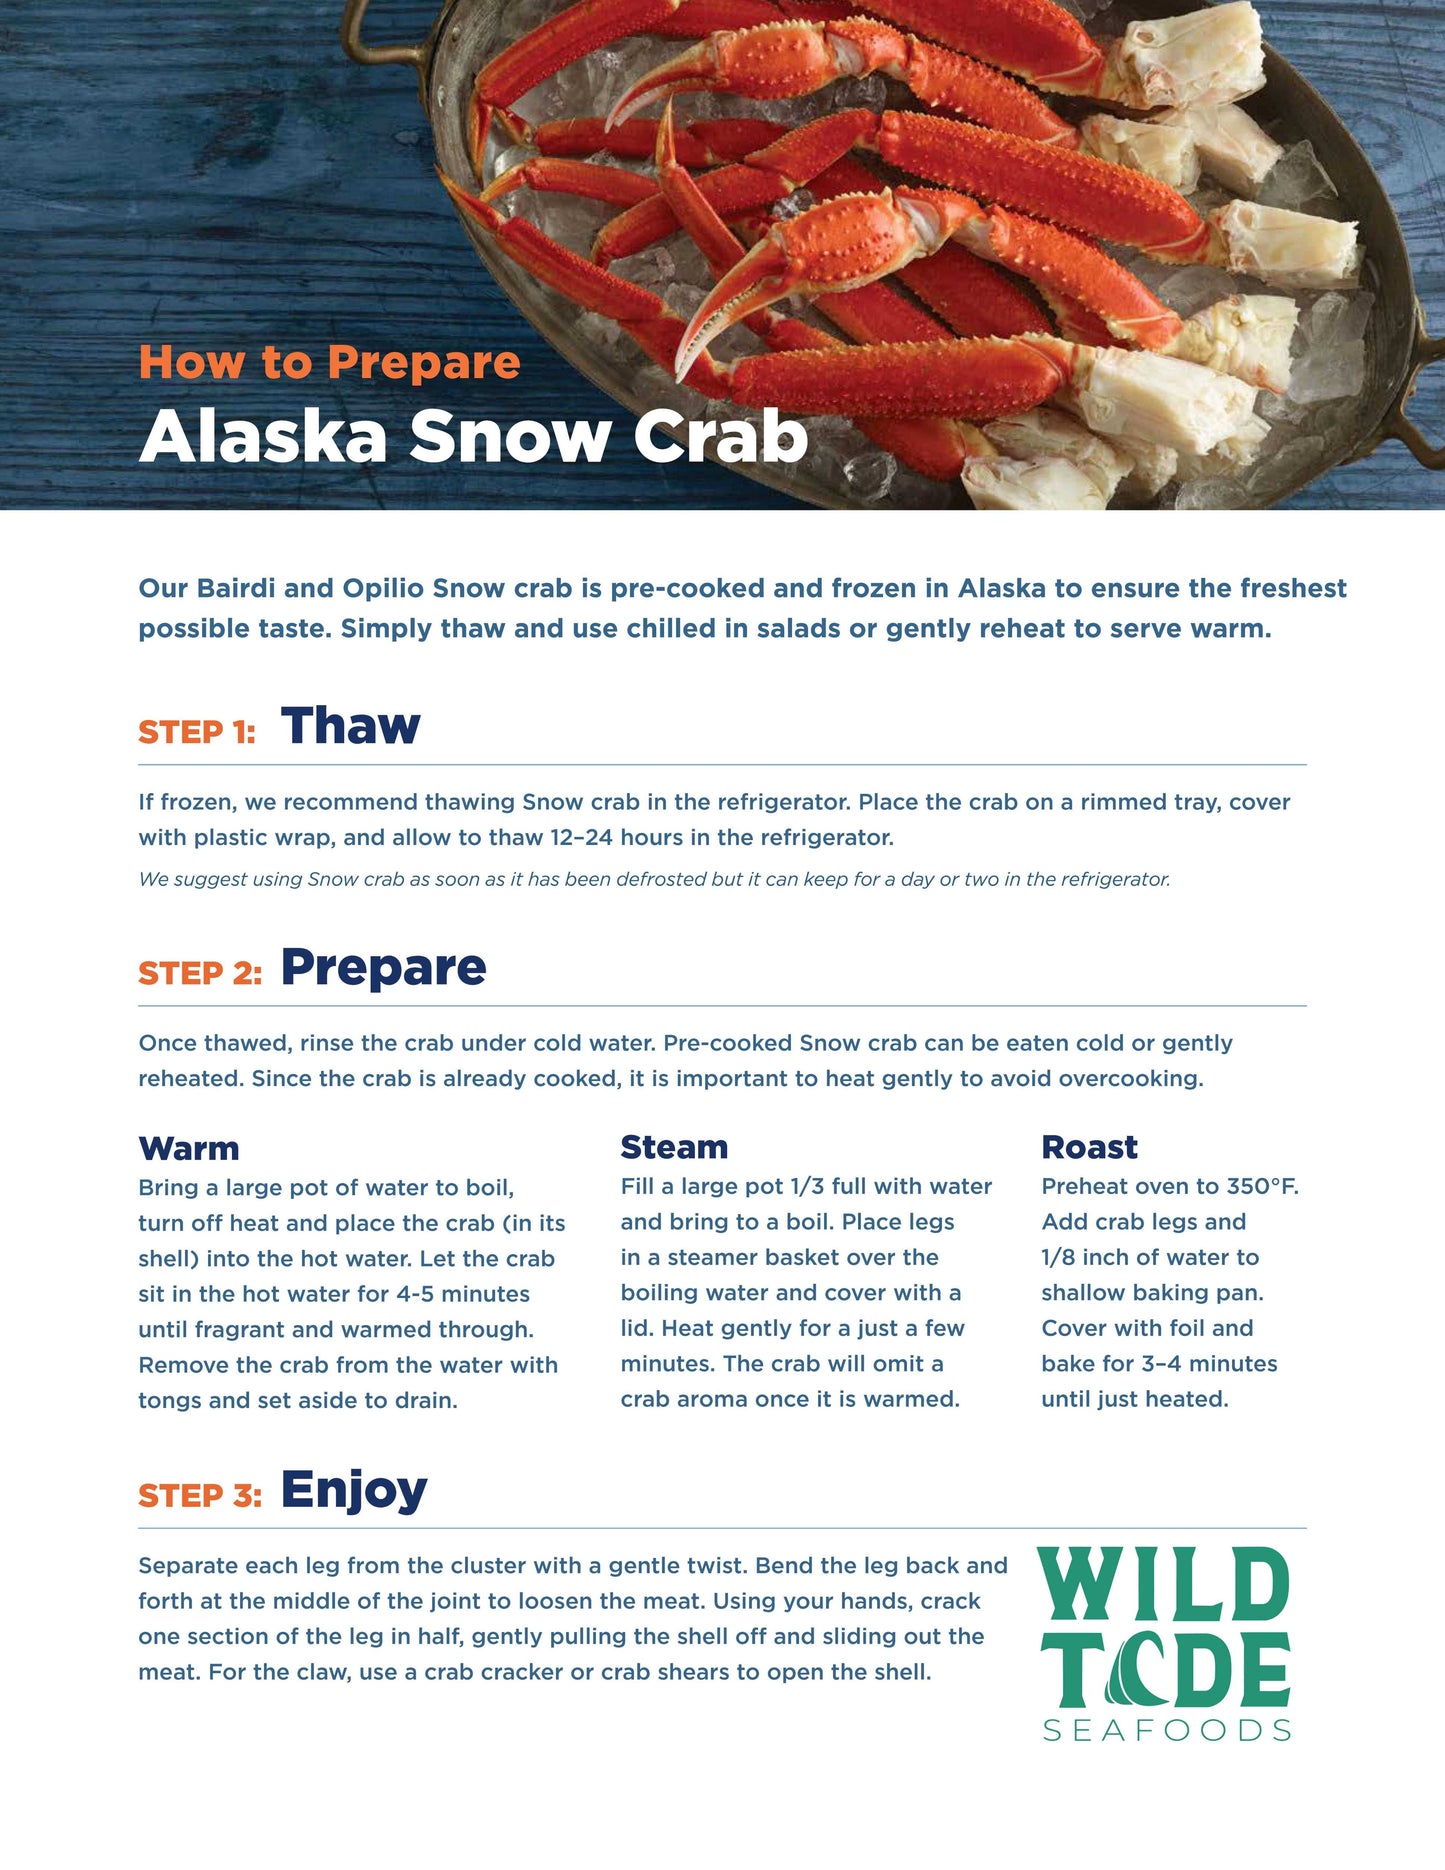 How to cook Bairdi Snow Crab